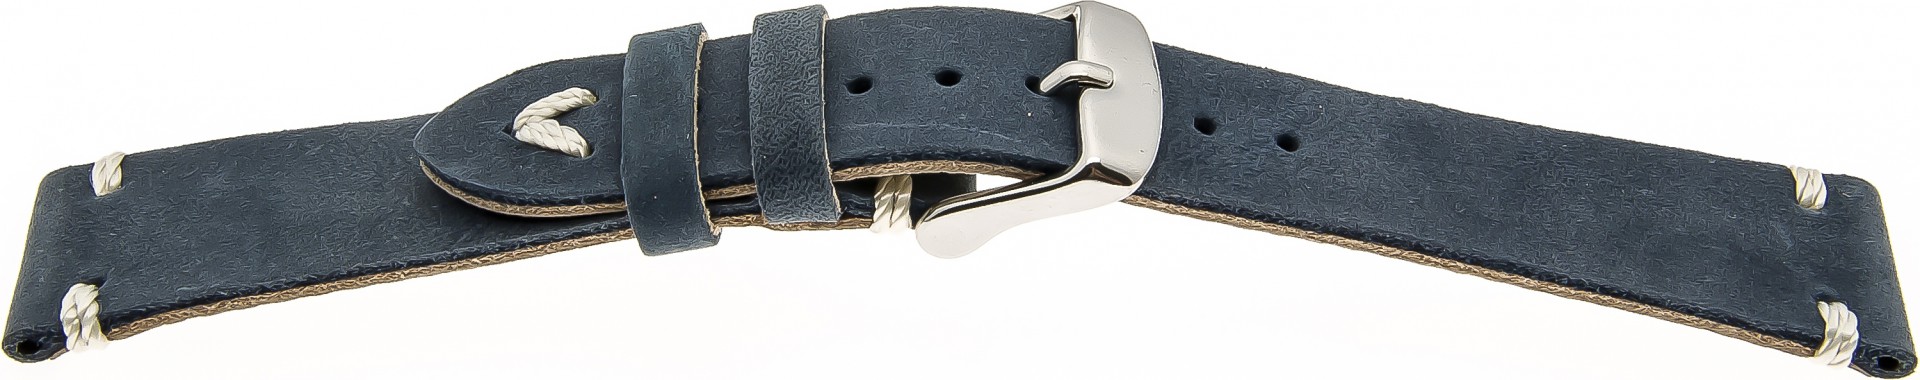   Uhrenarmband V-Band Dornschließe - Leder, extra stark, Leder, glatt - dunkelblau mit weißer Naht 